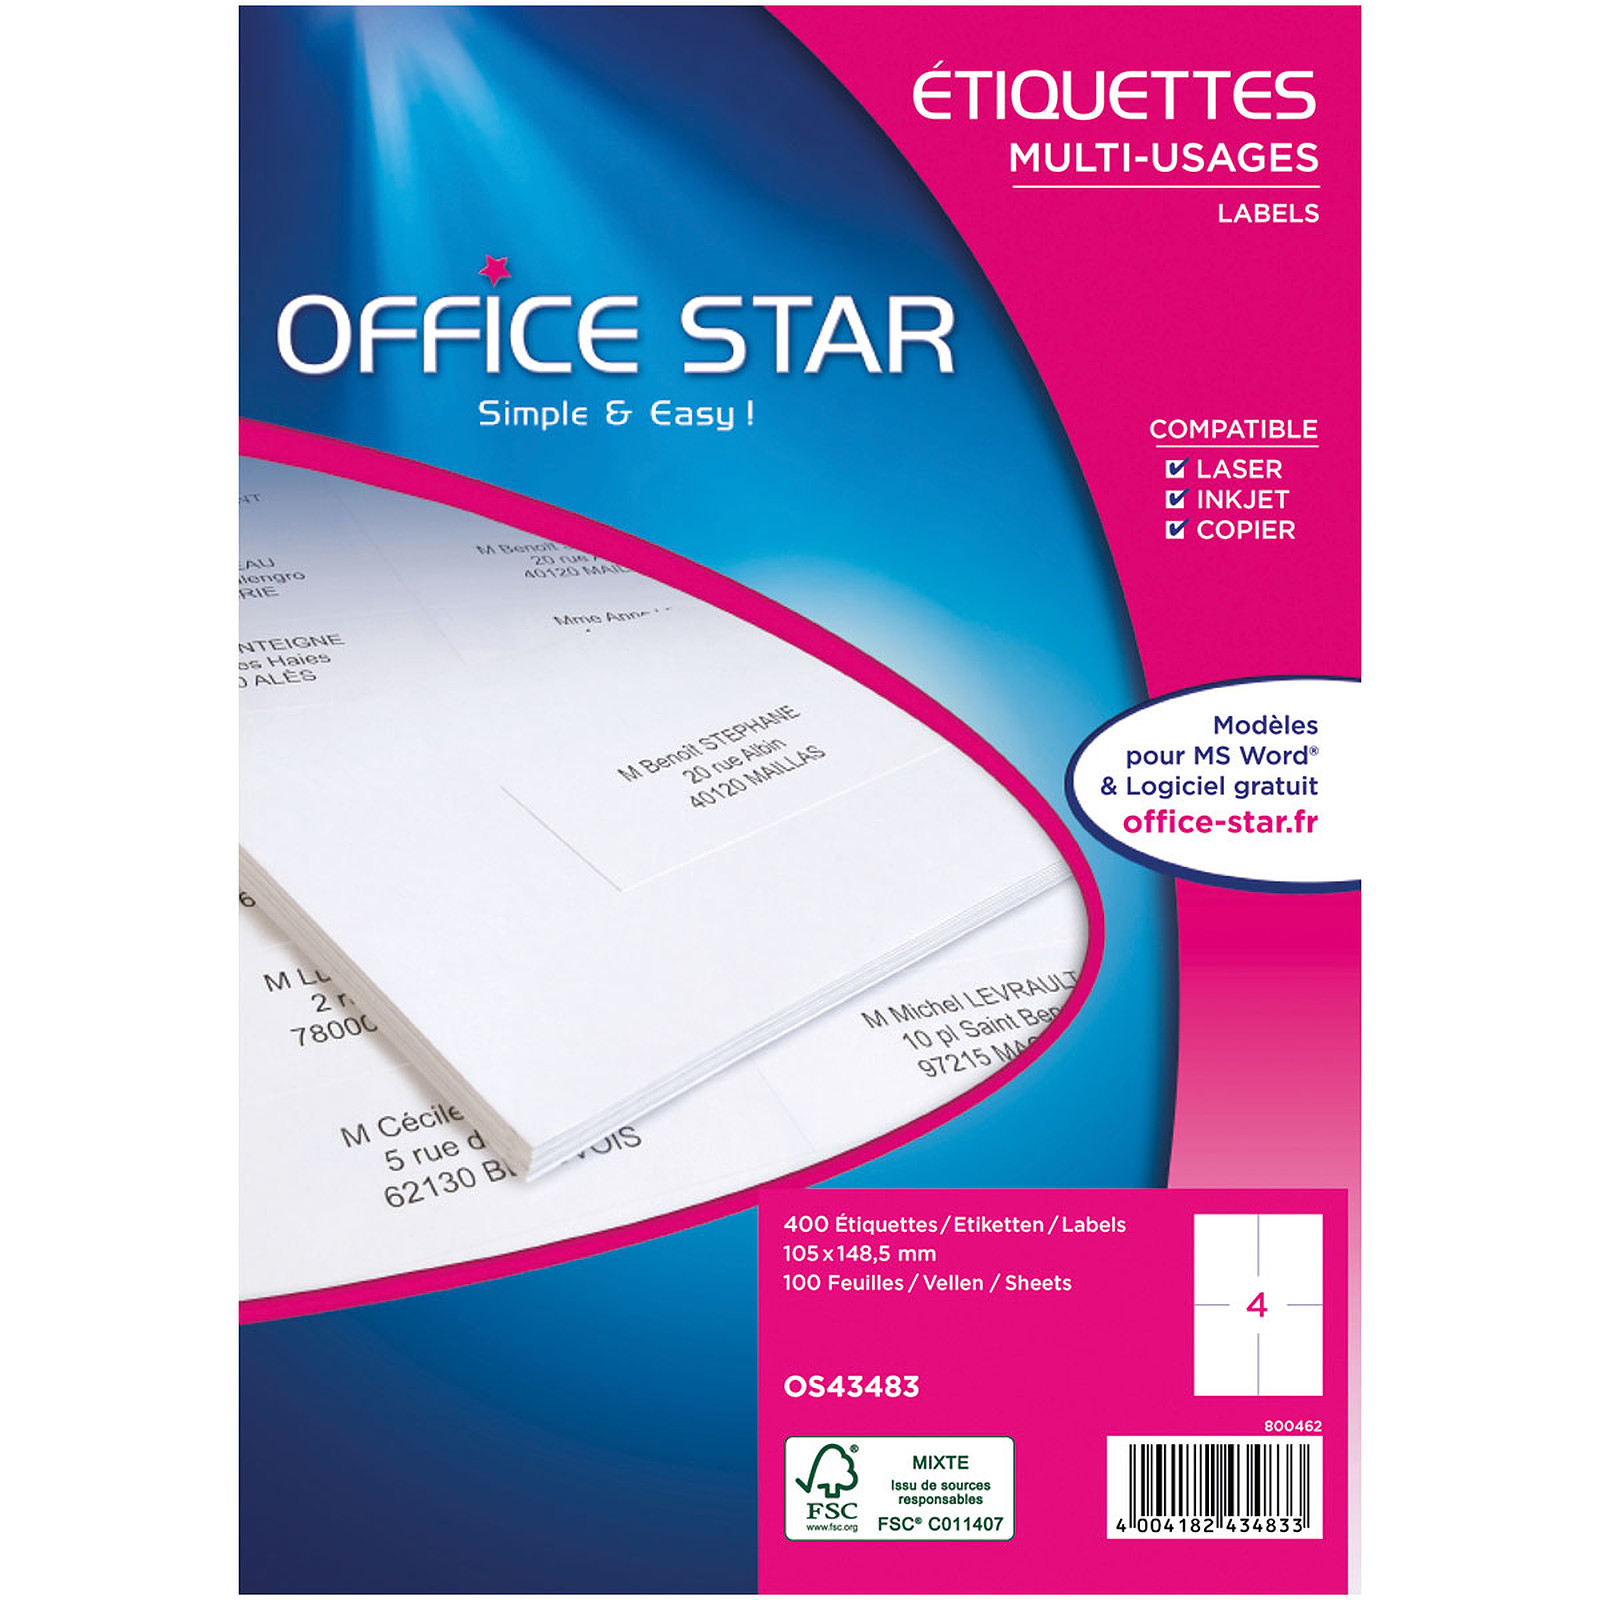 Office Star Etiquettes 105 x 148.5 mm x 400 - Etiquette Office Star